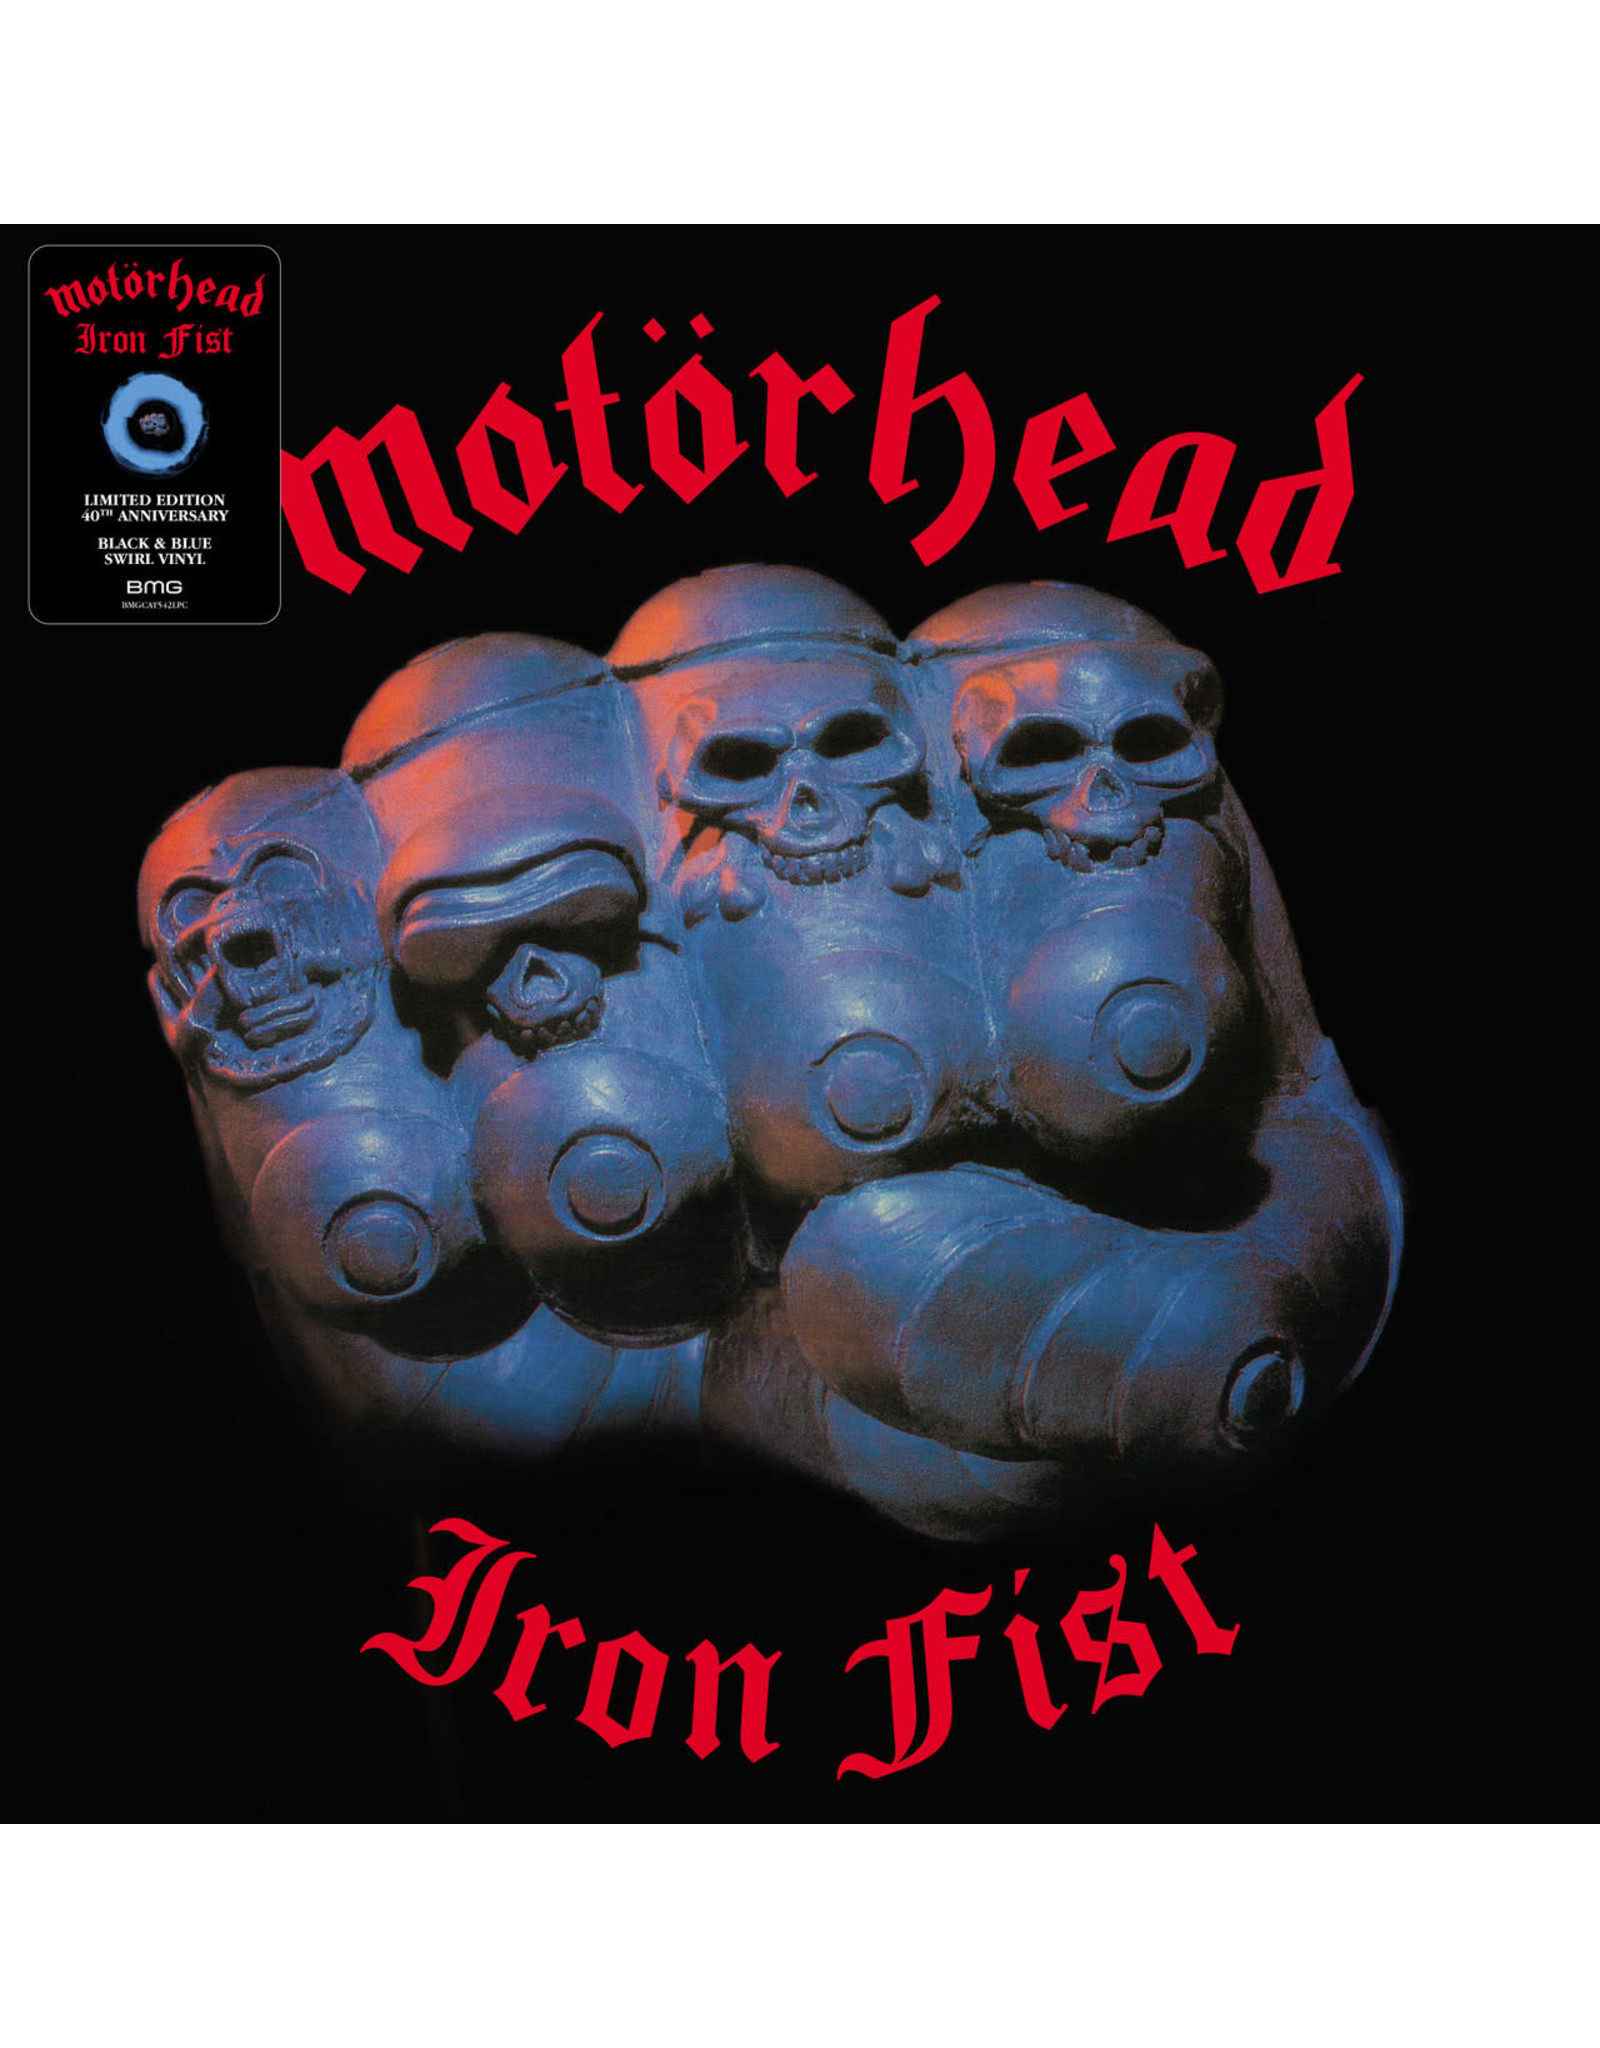 MOTÖRHEAD's 40th Anniversary Edition 'Iron Fist' in September 